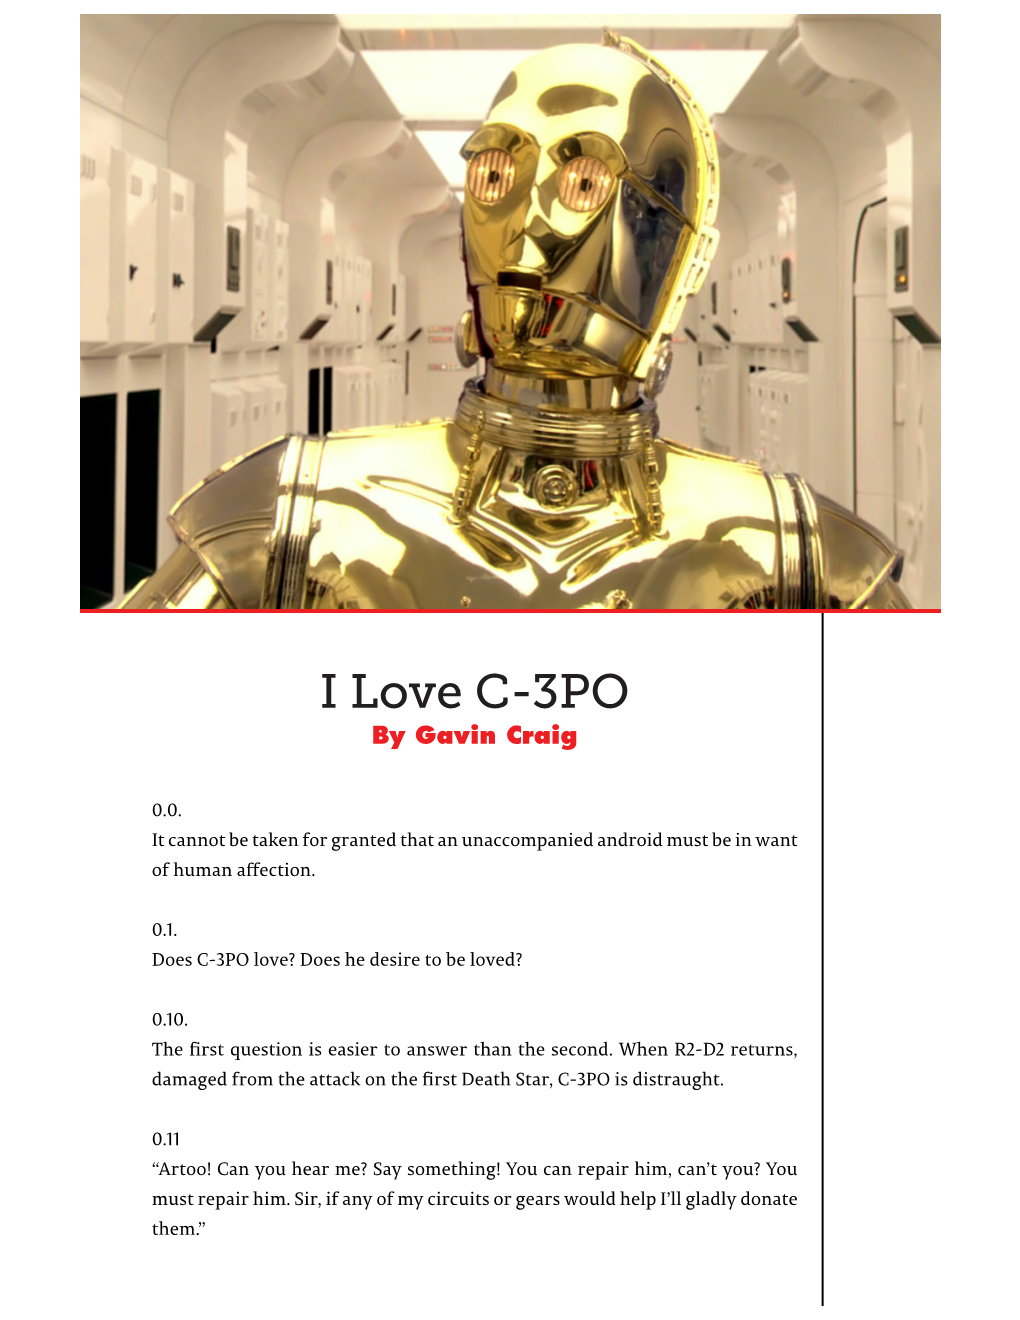 I Love C-3PO by Gavin Craig